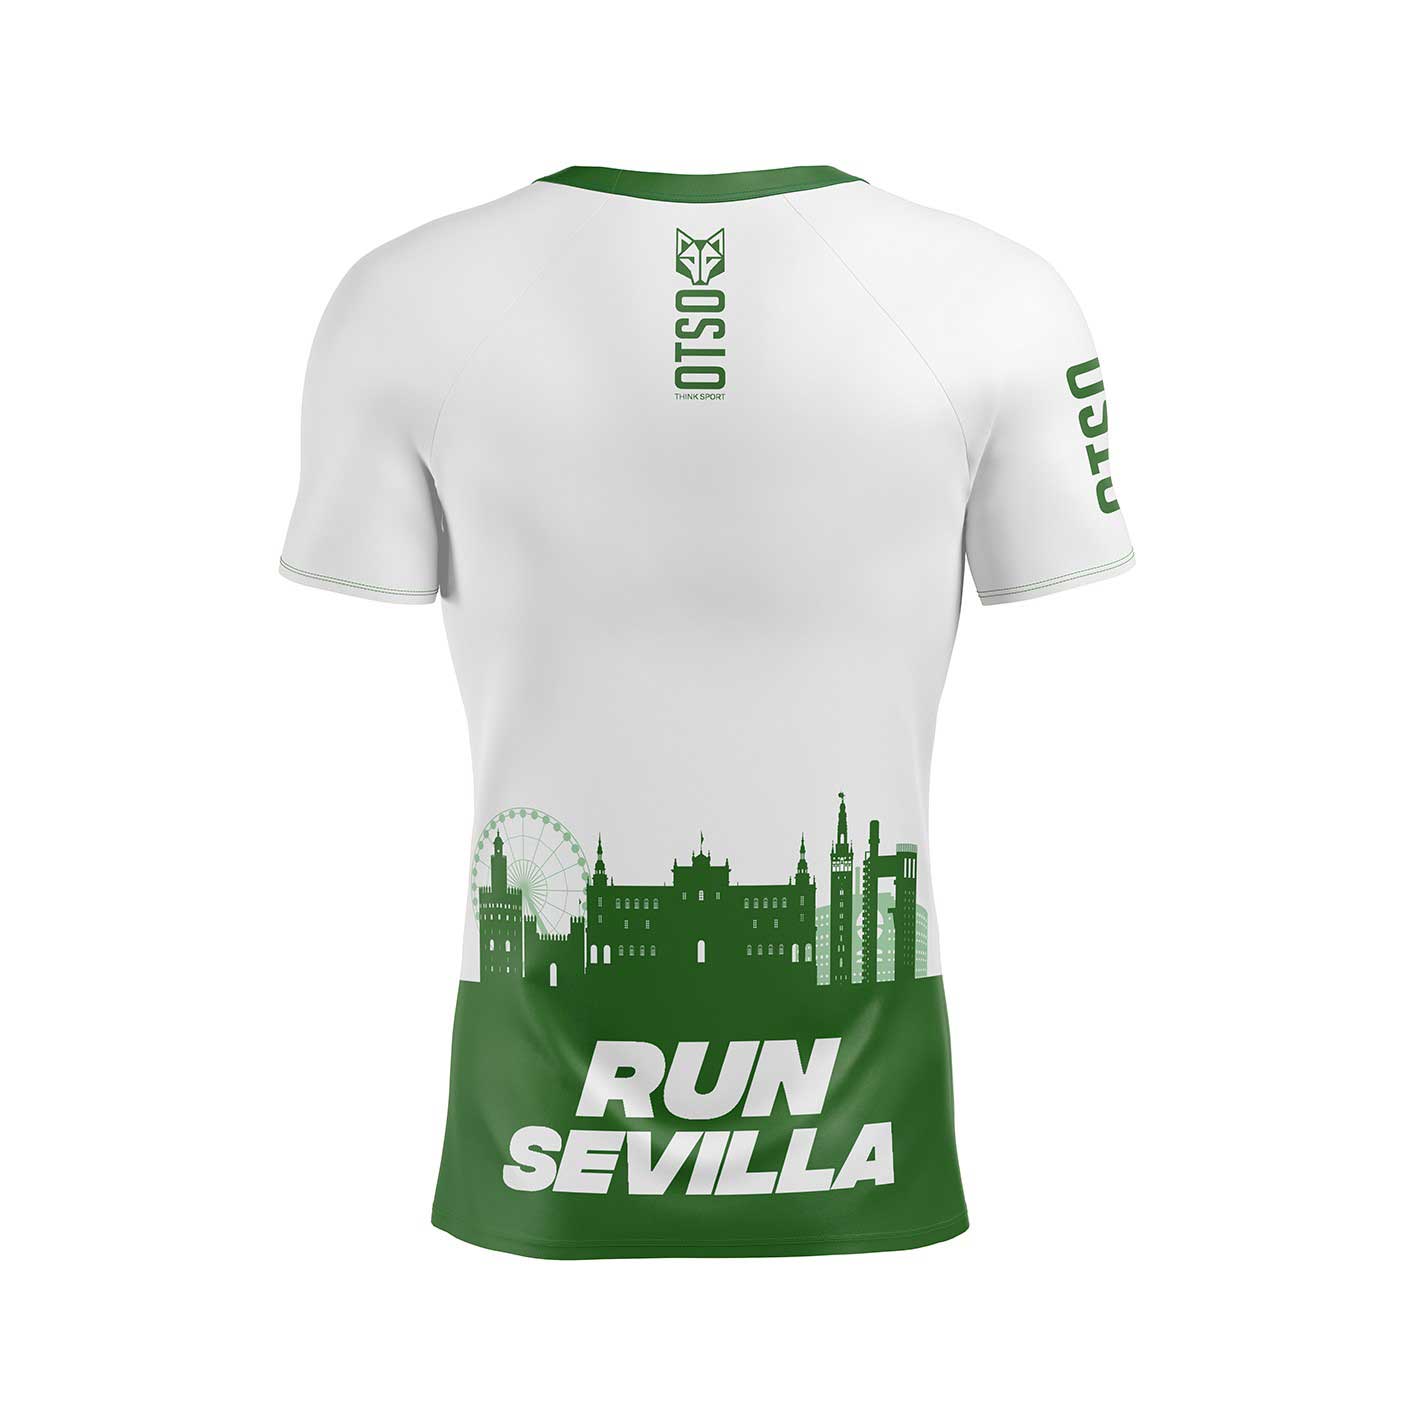 Camiseta manga corta hombre - Run Sevilla (Outlet)